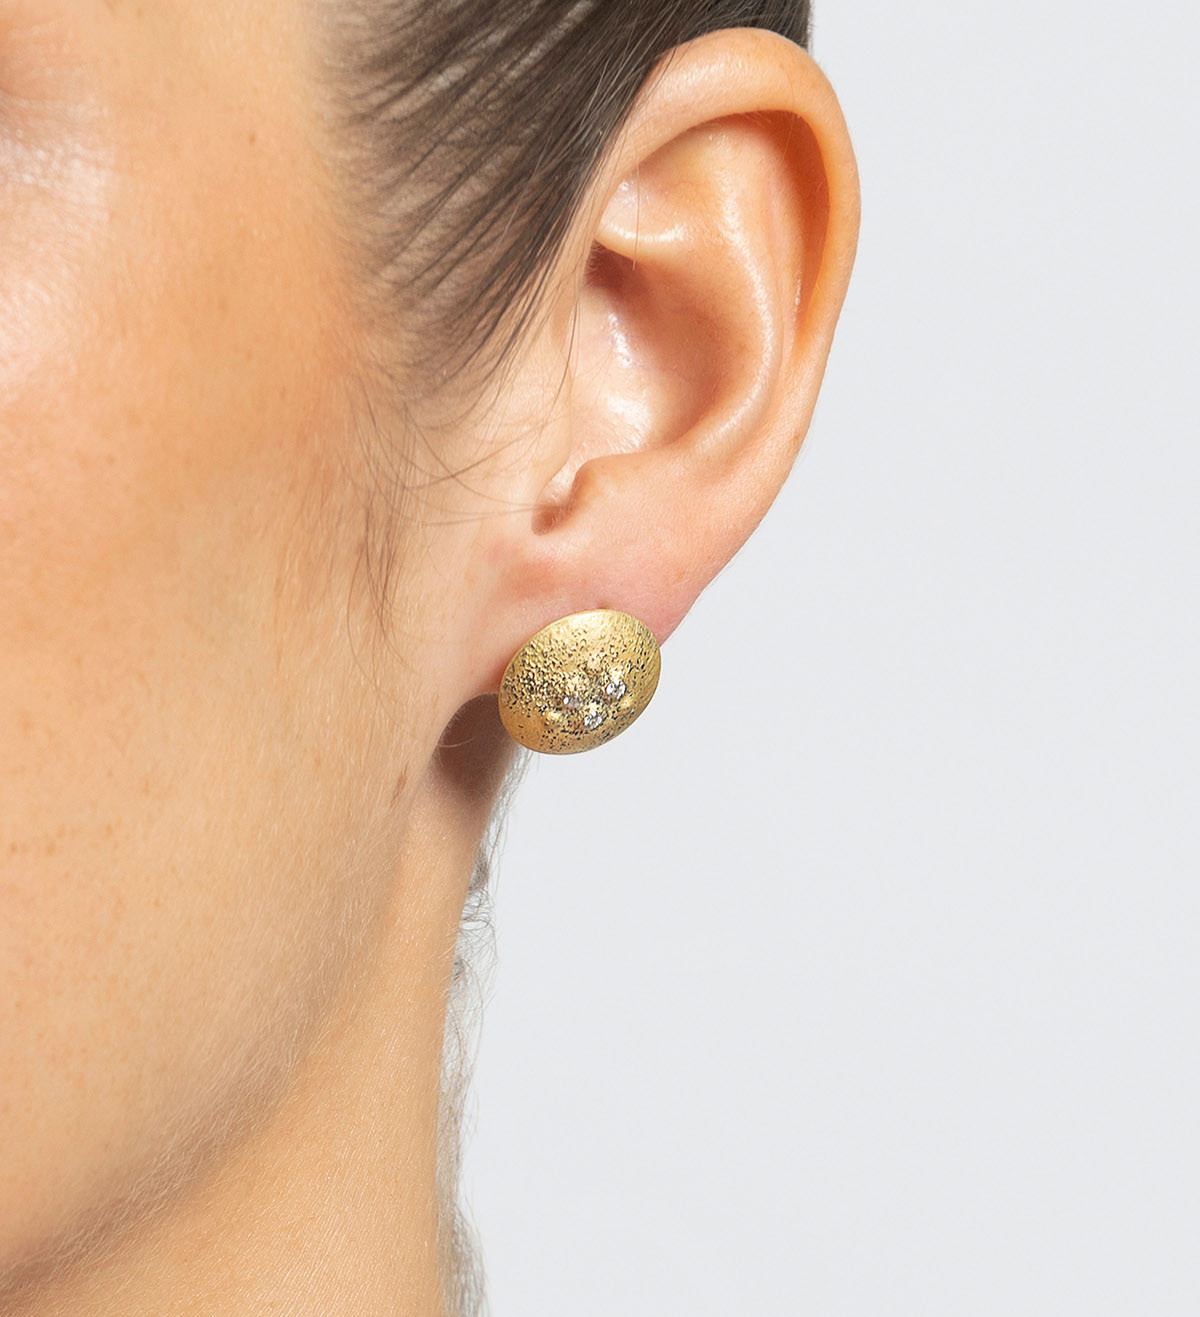 18k gold, paladium and diamonds earrings Bosc 15mm